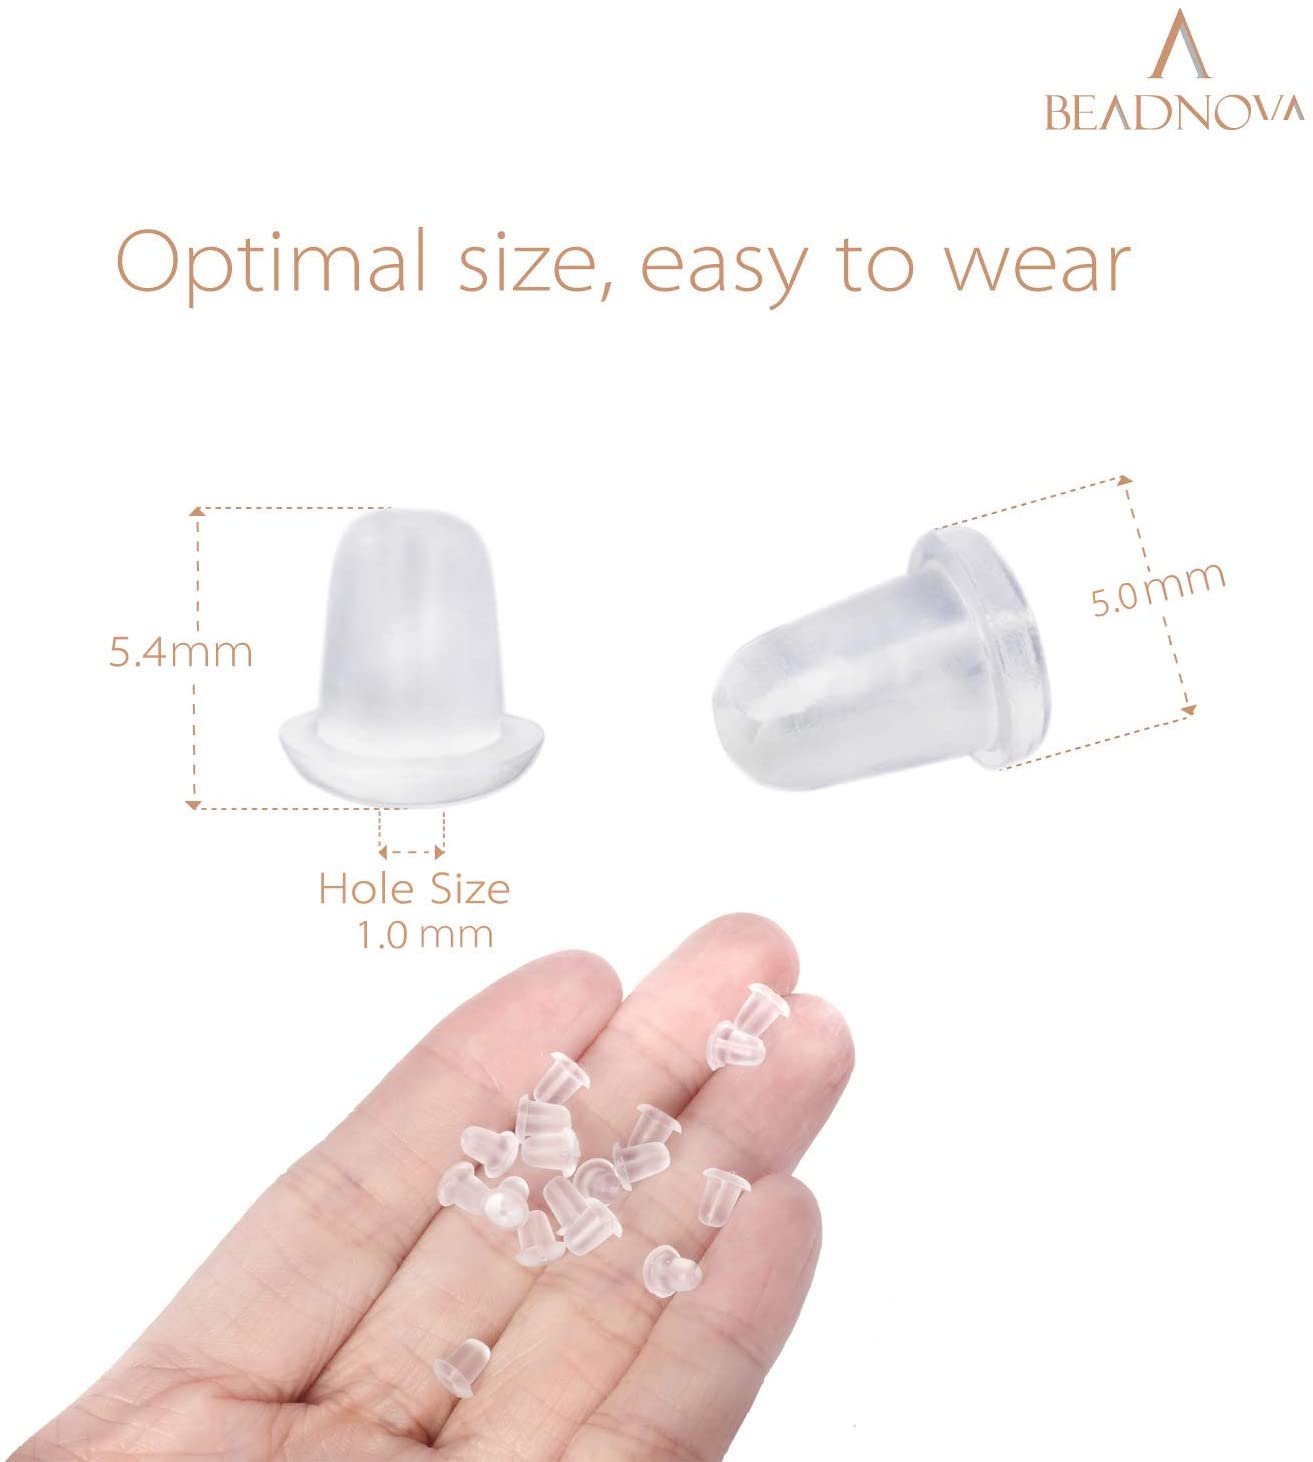 BEADNOVA Earring Backs Rubber Soft Clear Earing Backings